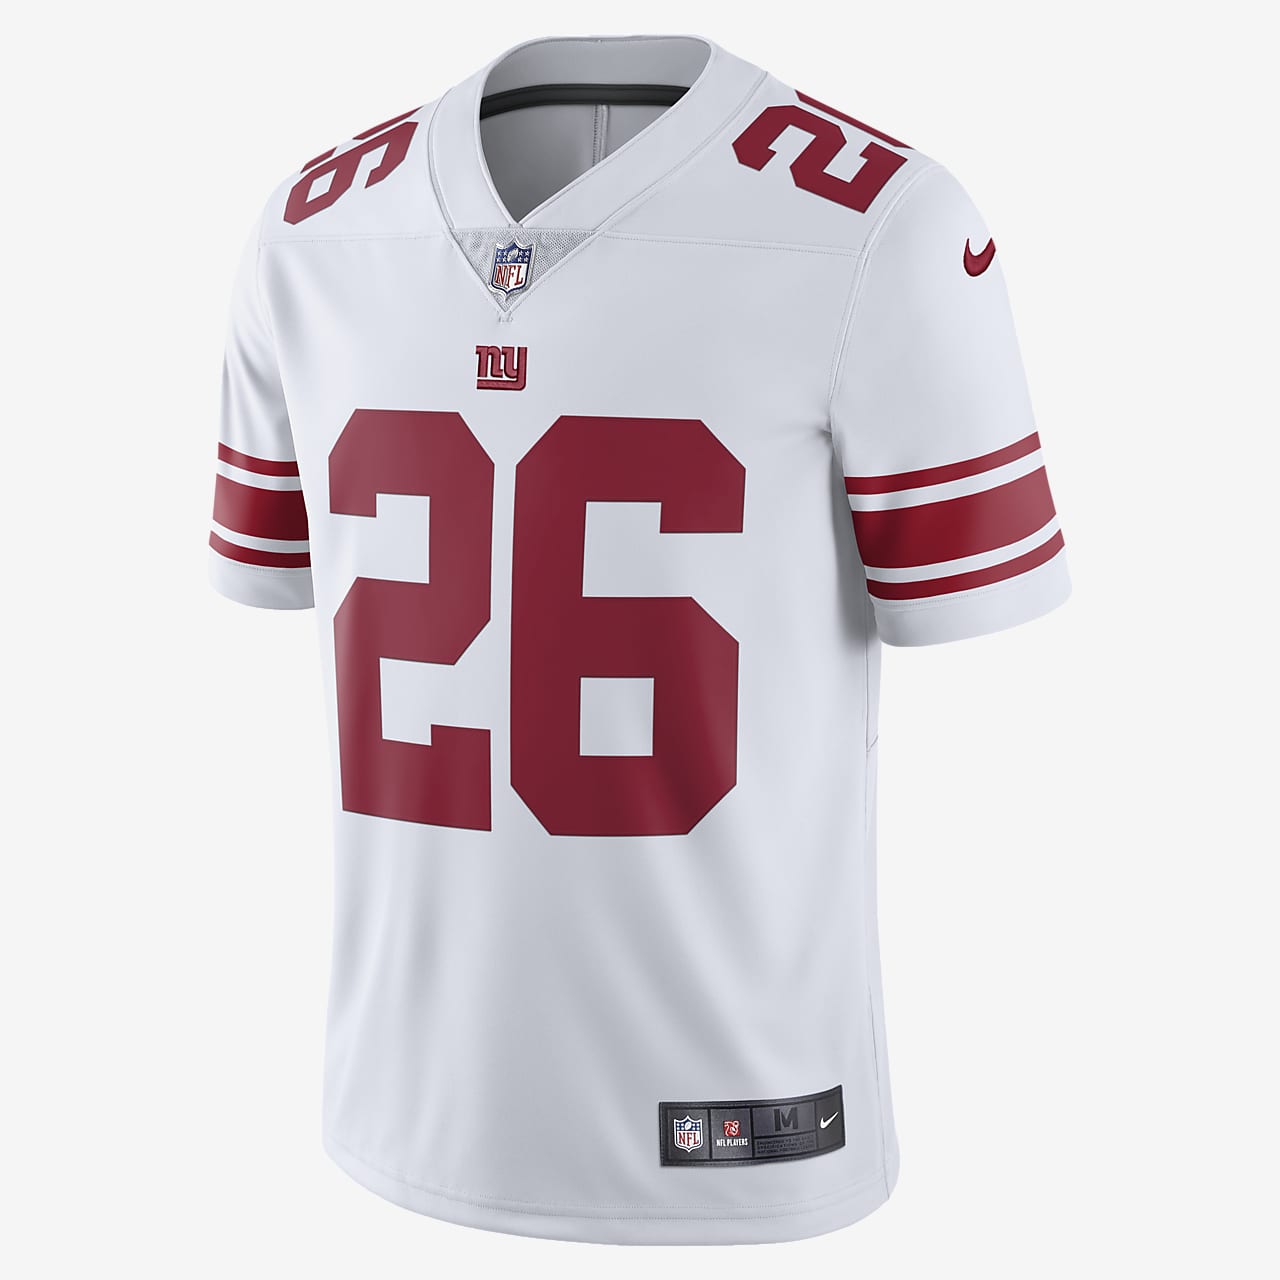 NFL New York Giants (Saquon Barkley) Men's Limited Football Jersey. Nike.com